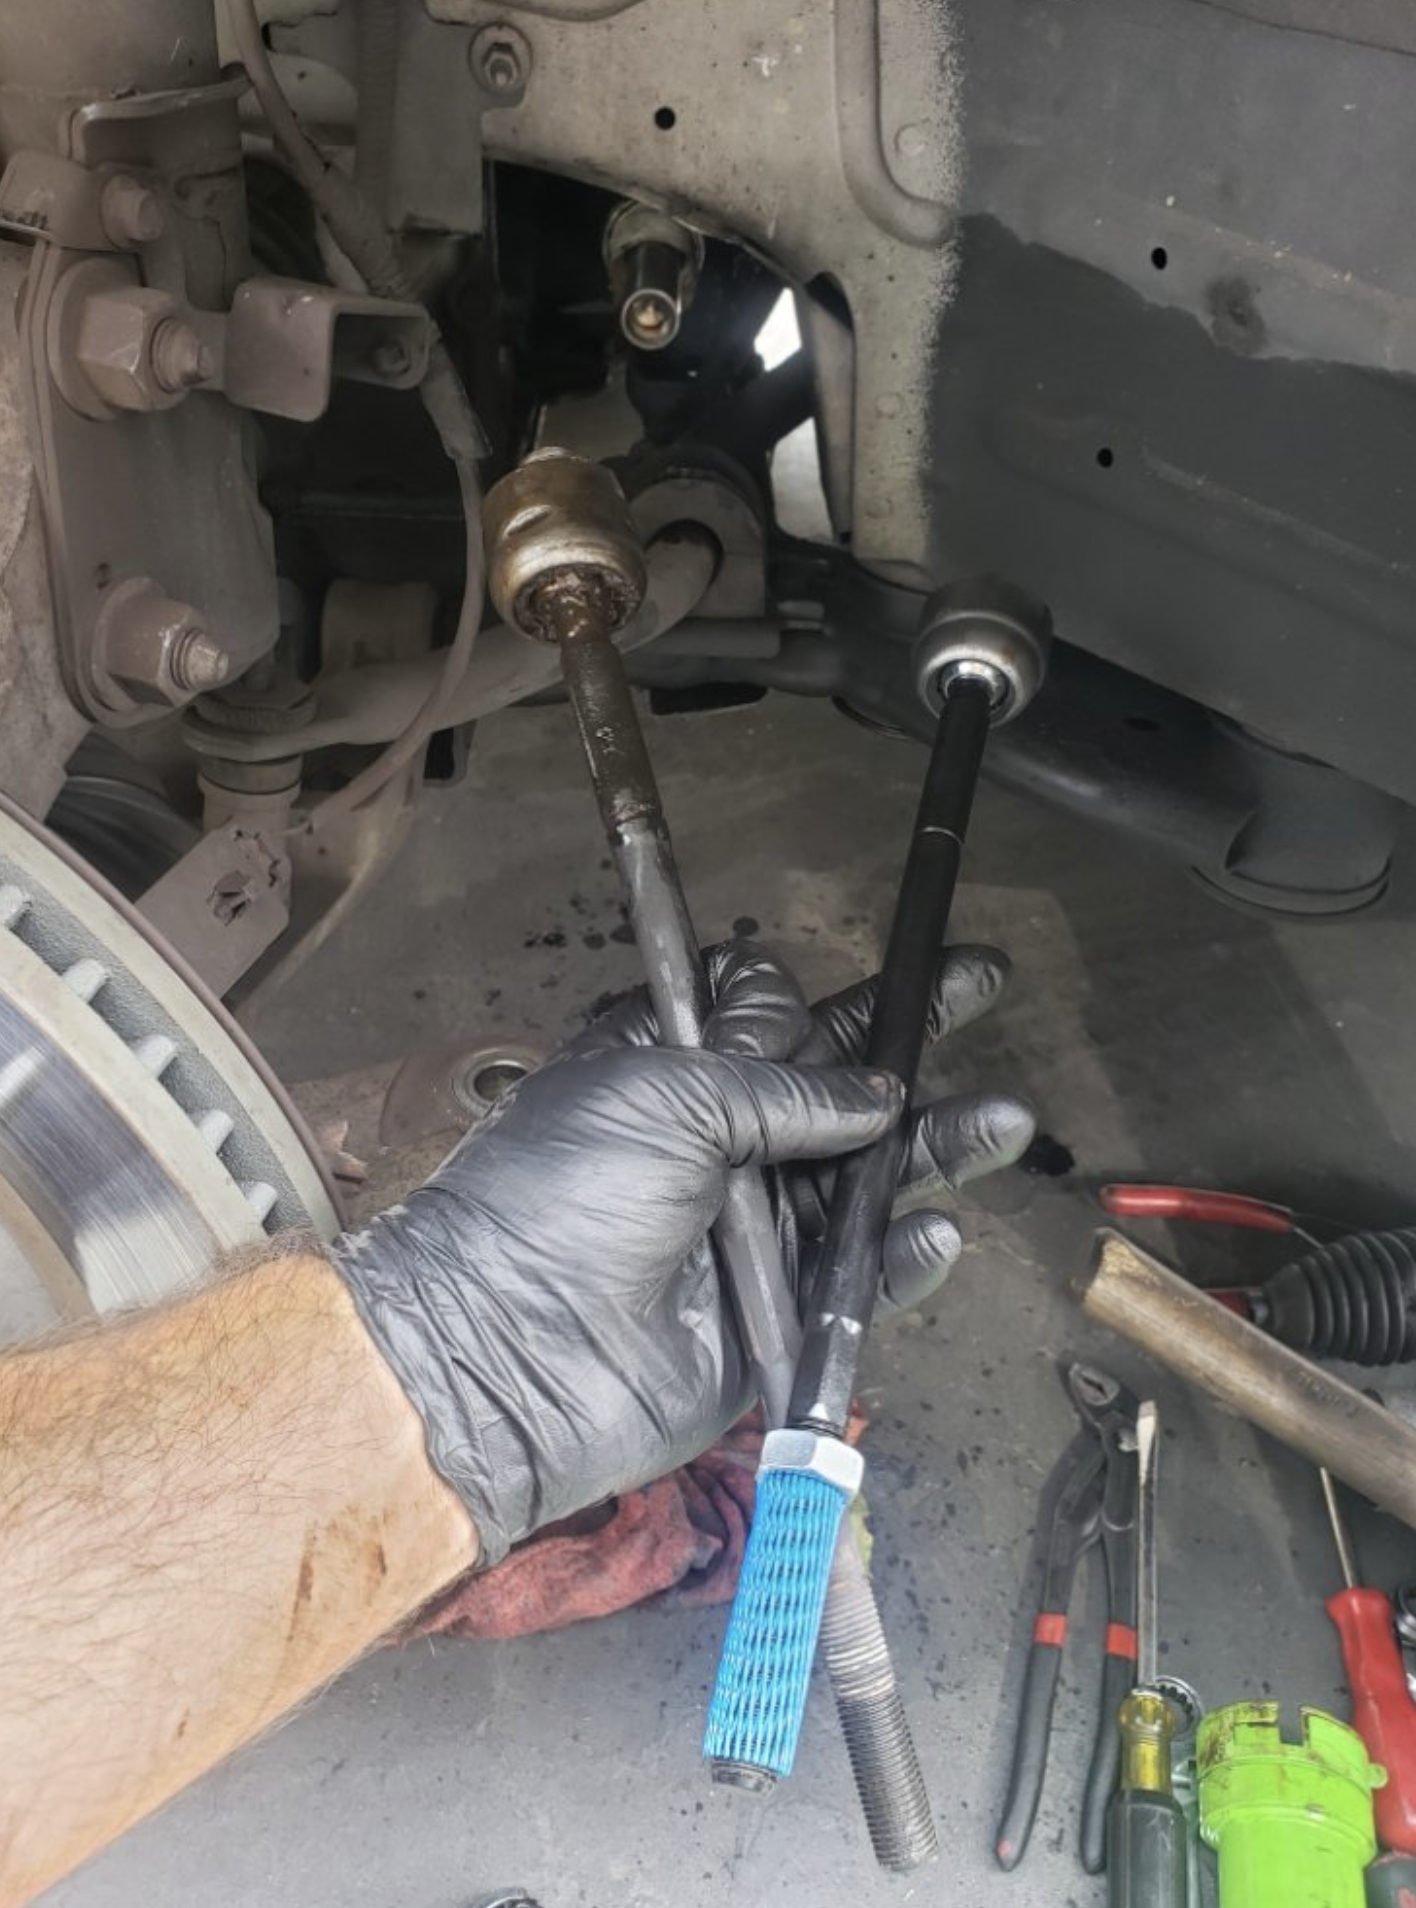 this image shows mechanic in Birmingham, AL